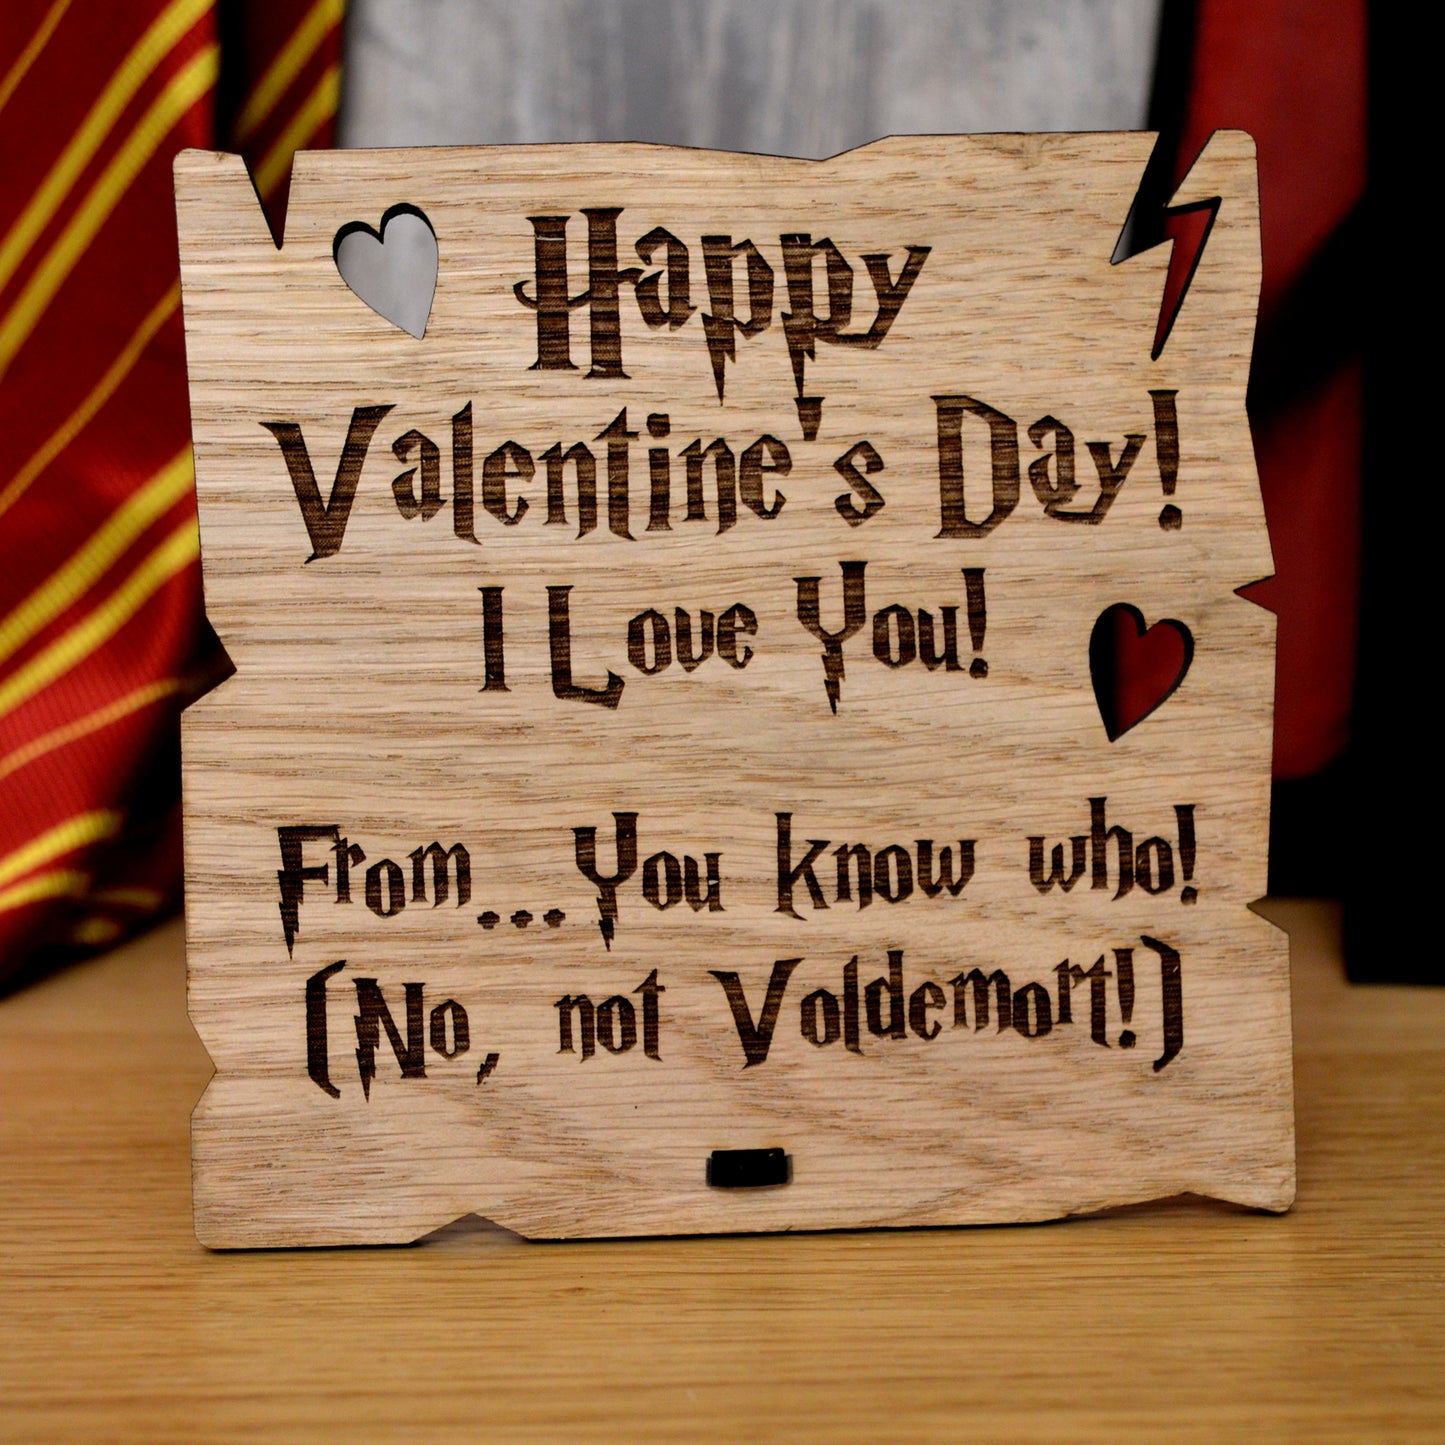 Harry Potter VOLDEMORT Valentines Day Plaque